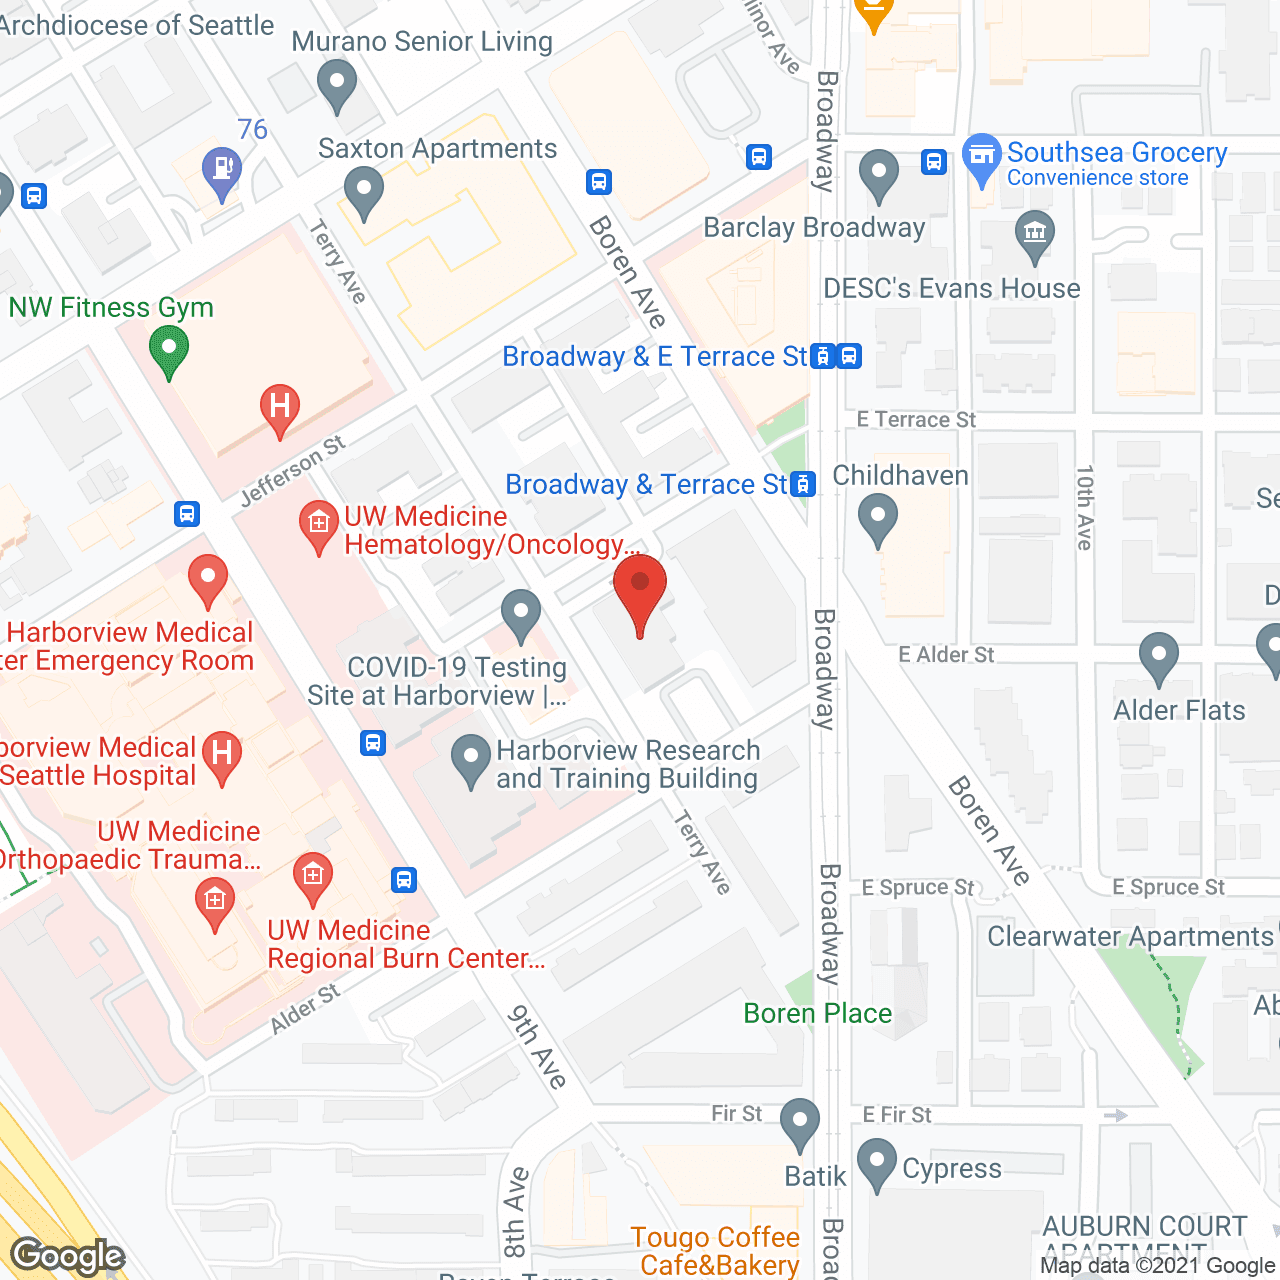 Hilltop in google map